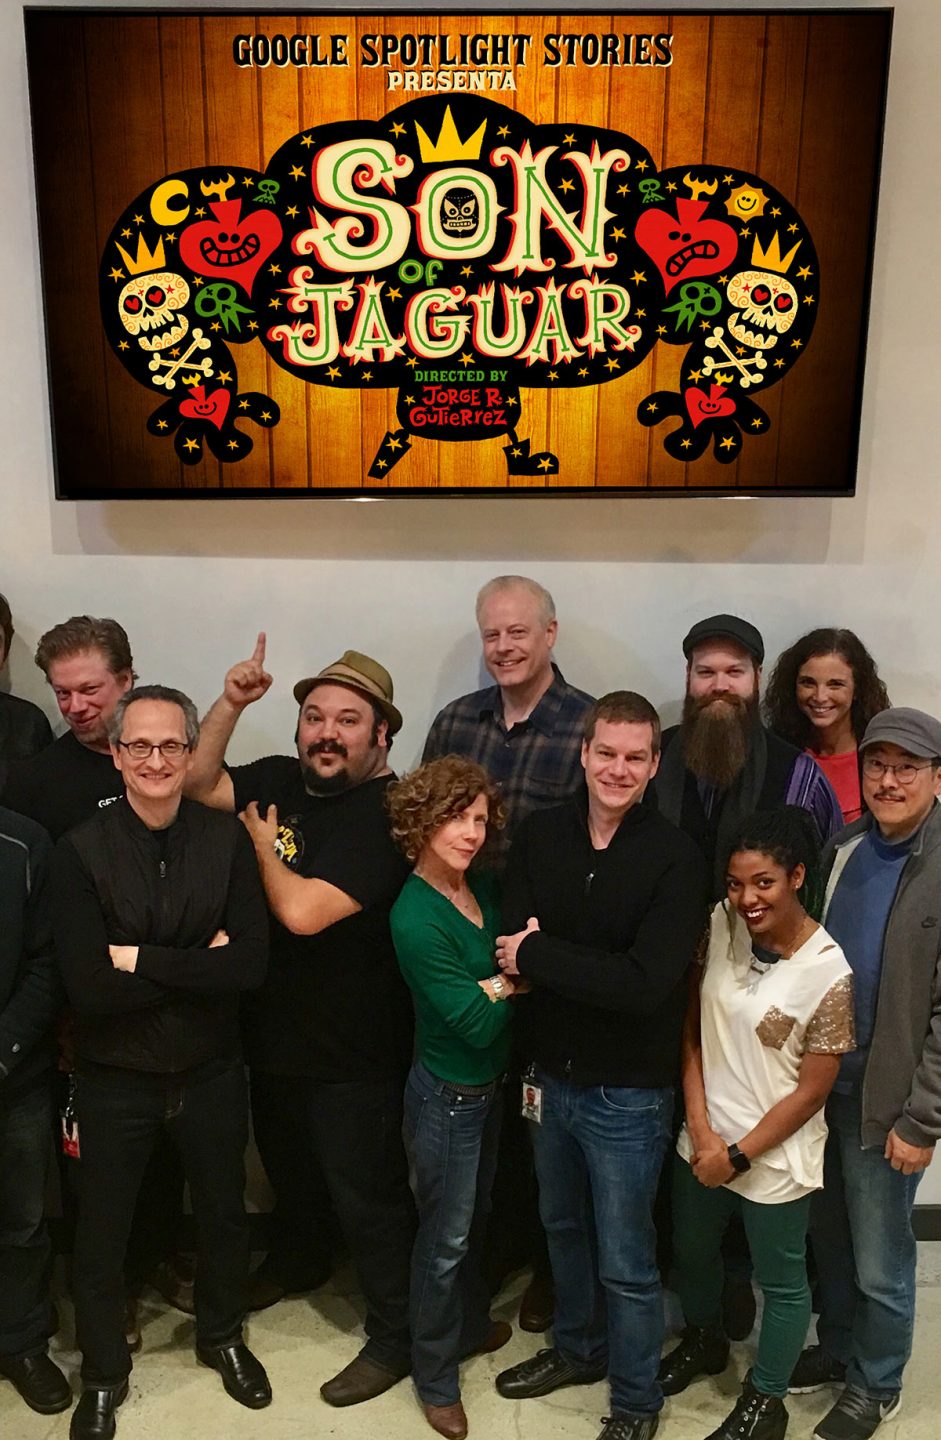 The Google Spotlight Stories team. In front: creative director Jan Pinkava, Jorge Gutierrez (pointing upward), exec producer Karen Dufilho, and "Son of Jaguar" producer David Eisenmann.